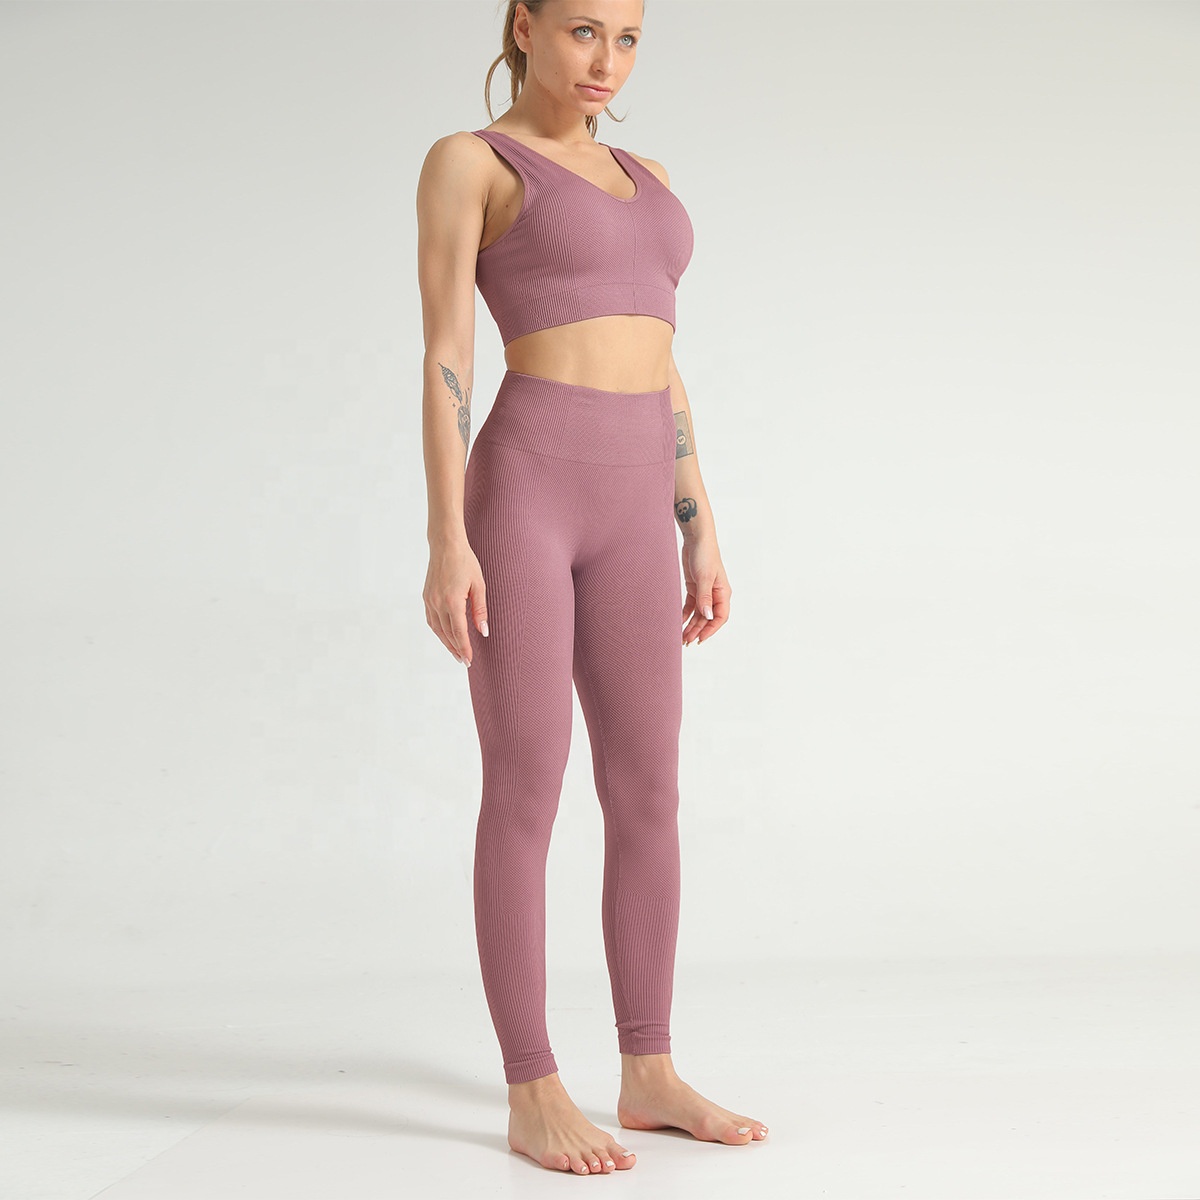 Wholesale 2020 New Design Women Premium Fitness Gym Apparel Wear Manufacturers